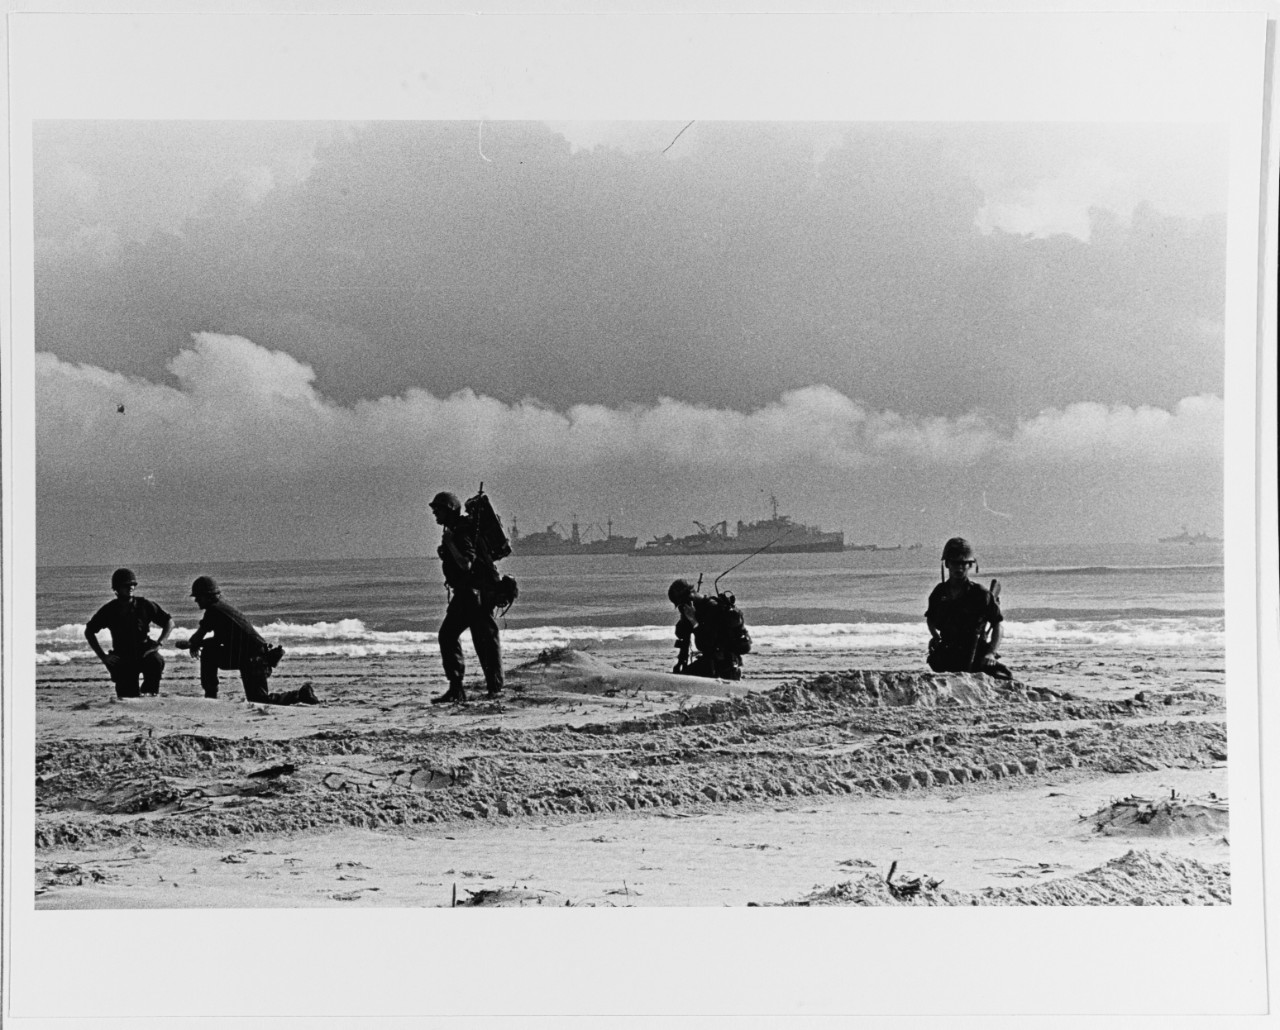 United States Marines on beach of South Vietnam